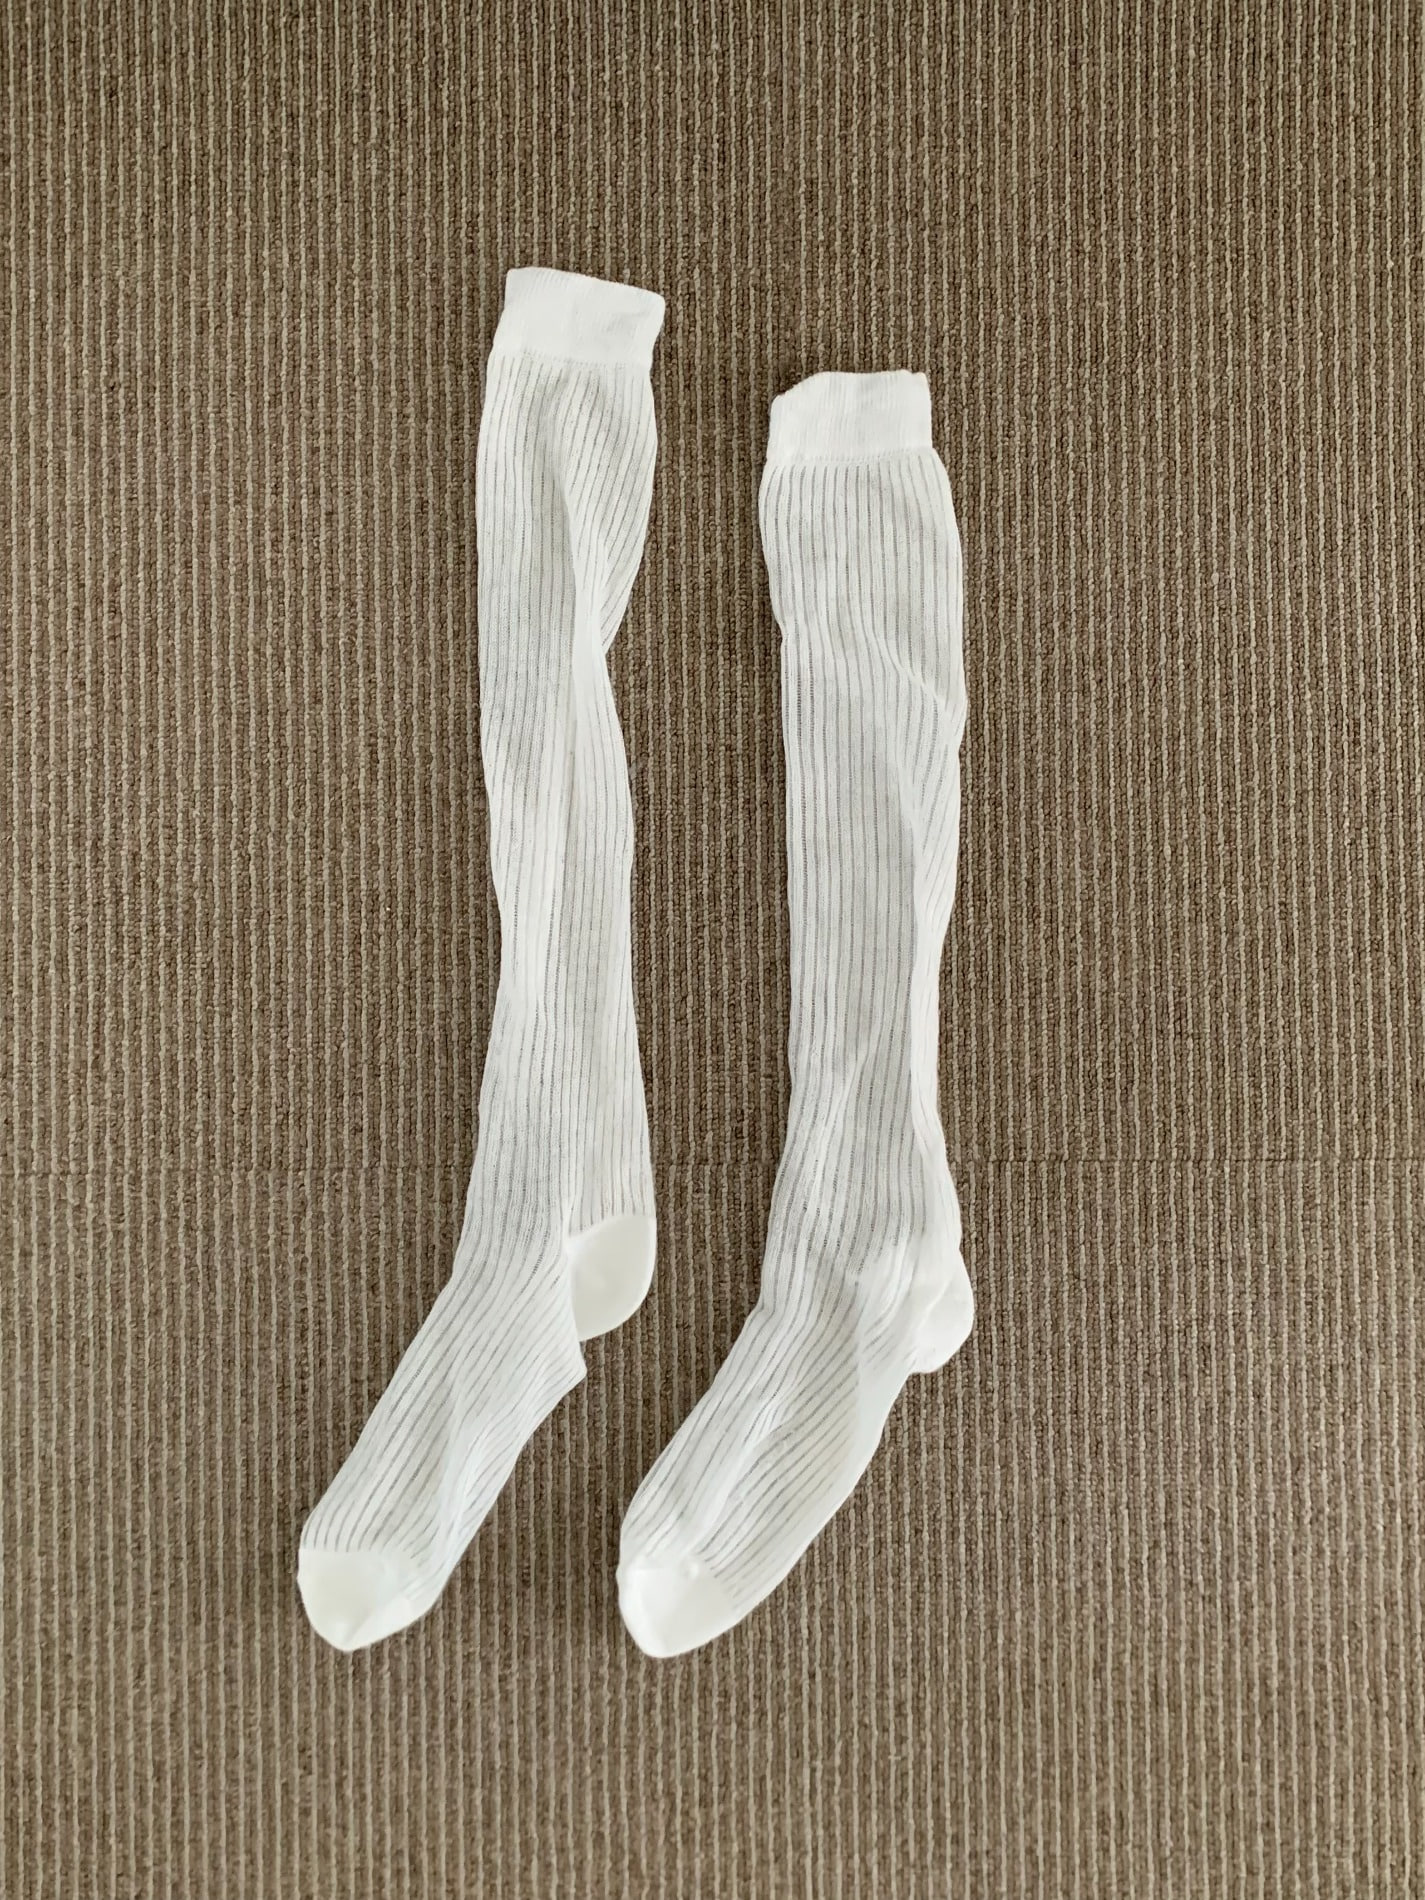 see through knee socks (2color)